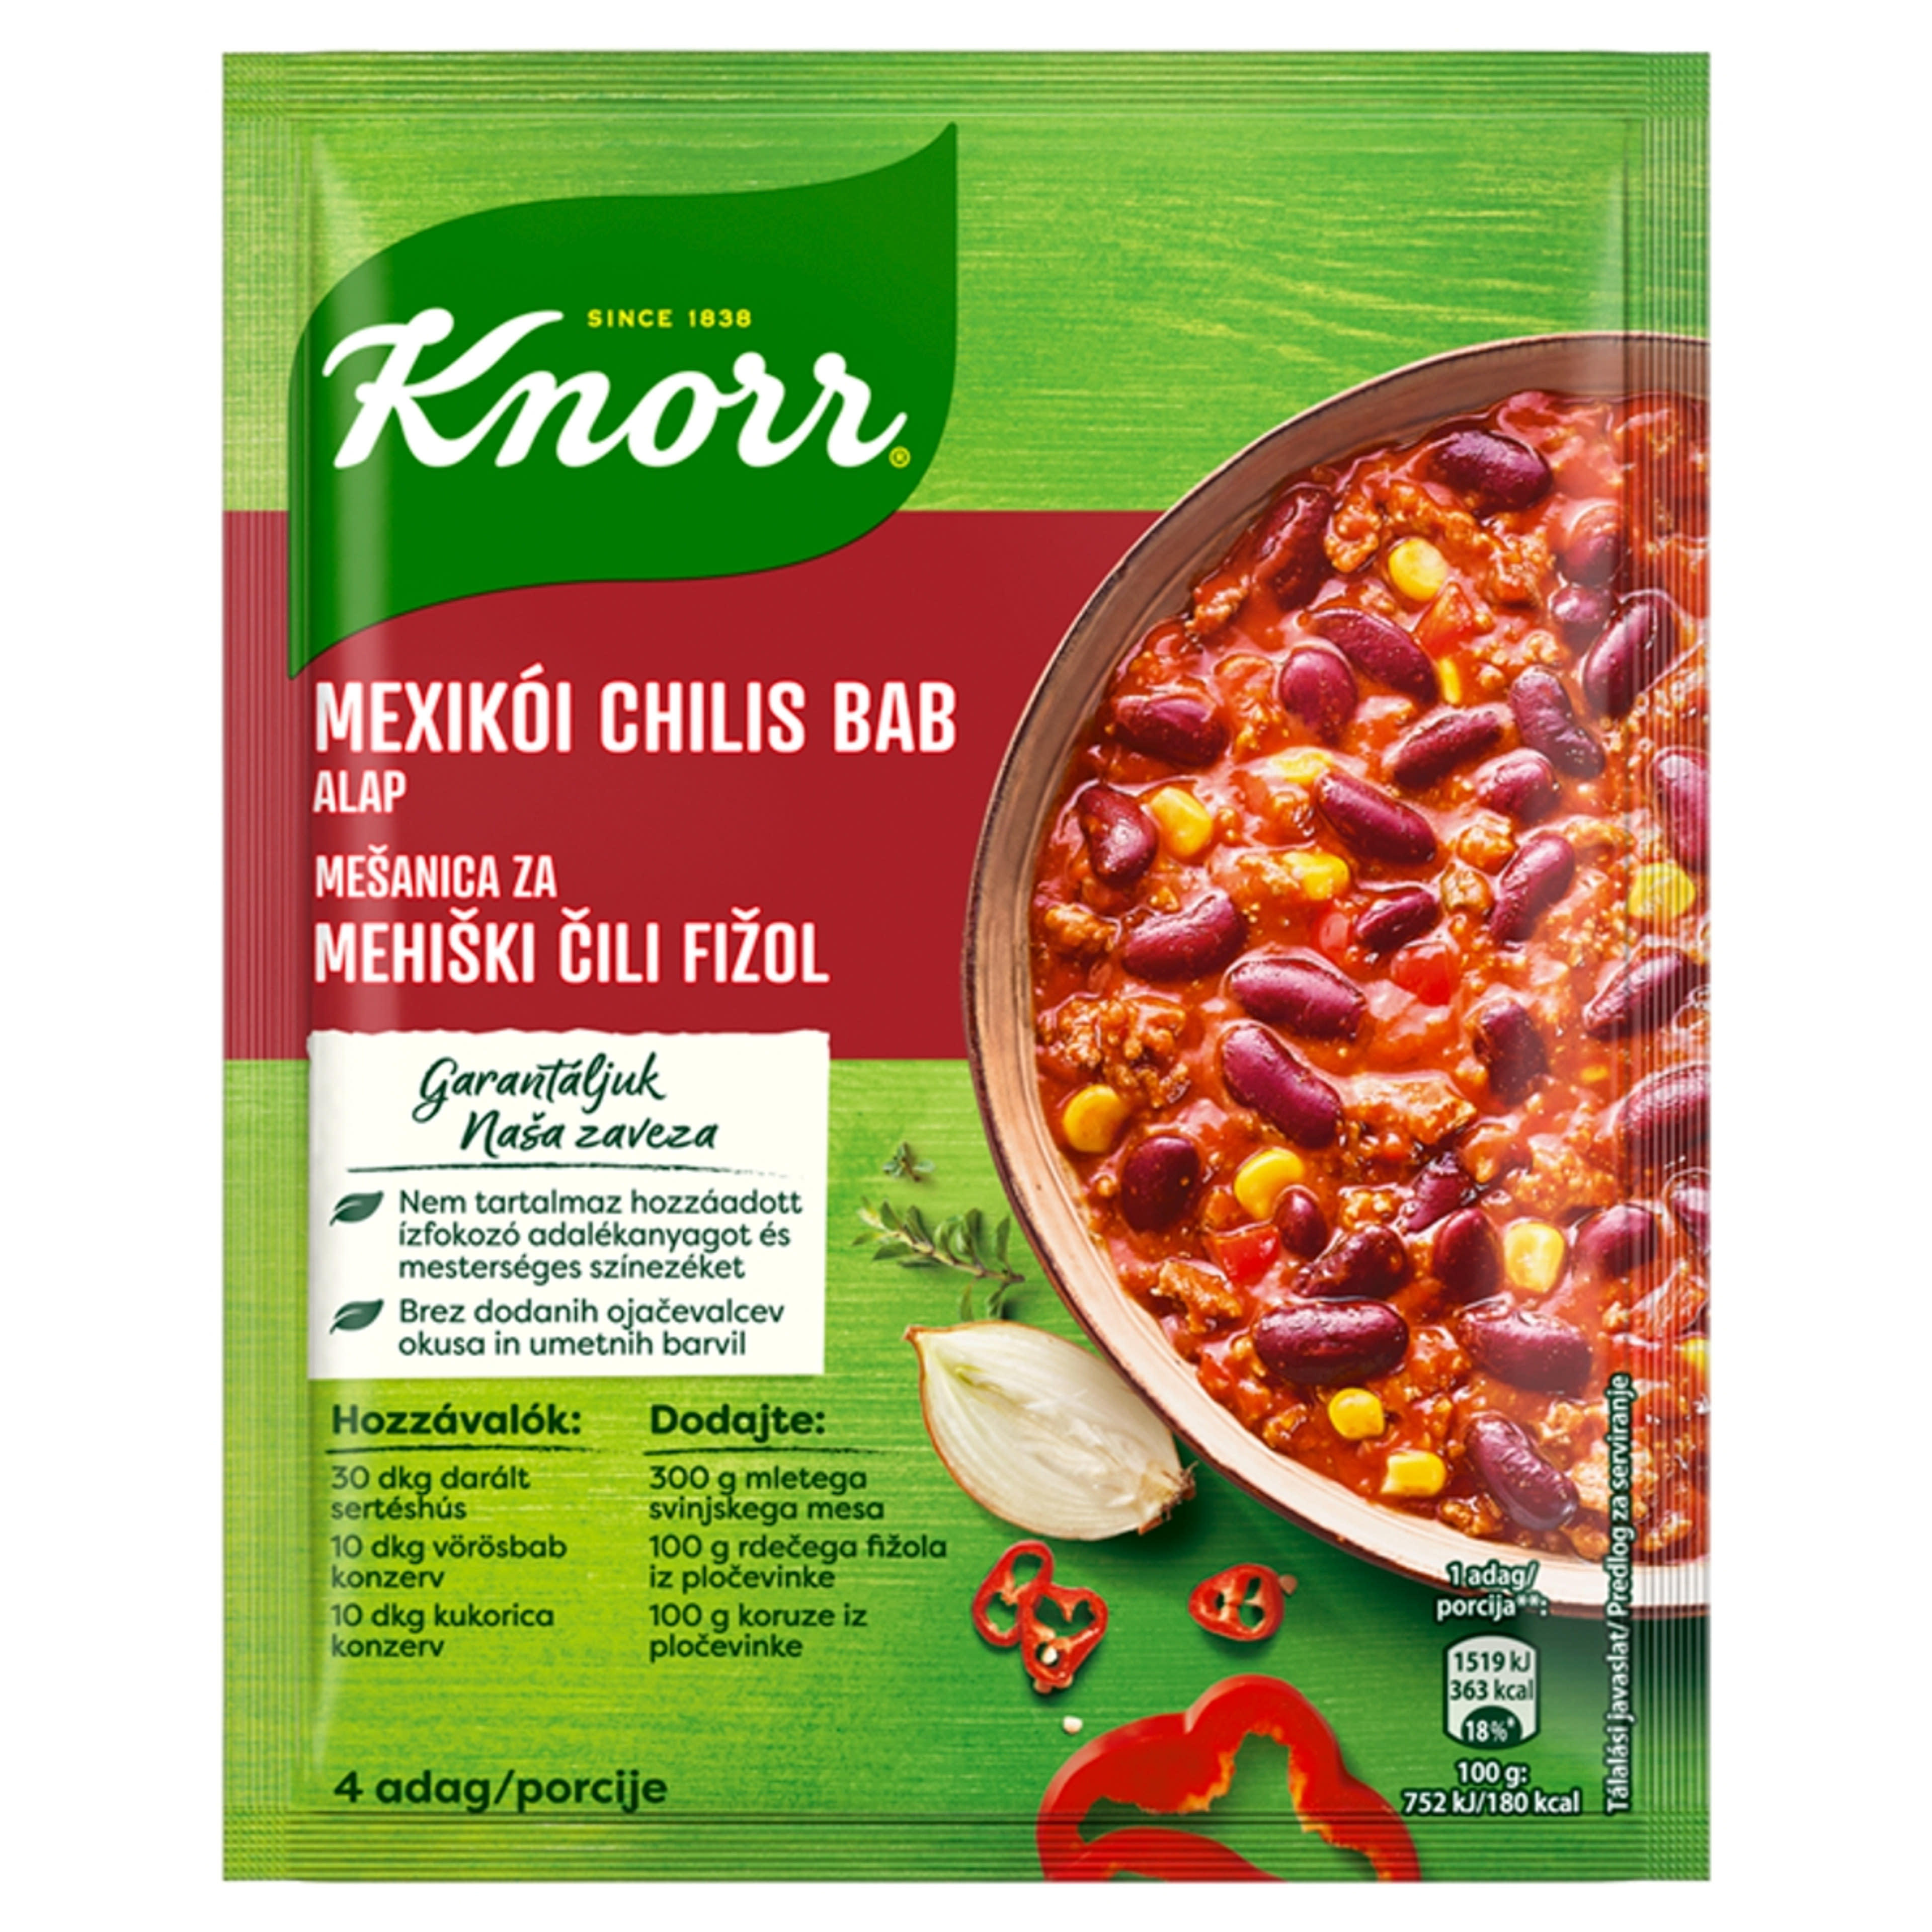 Knorr alap mexikói chilis bab - 50 g-1